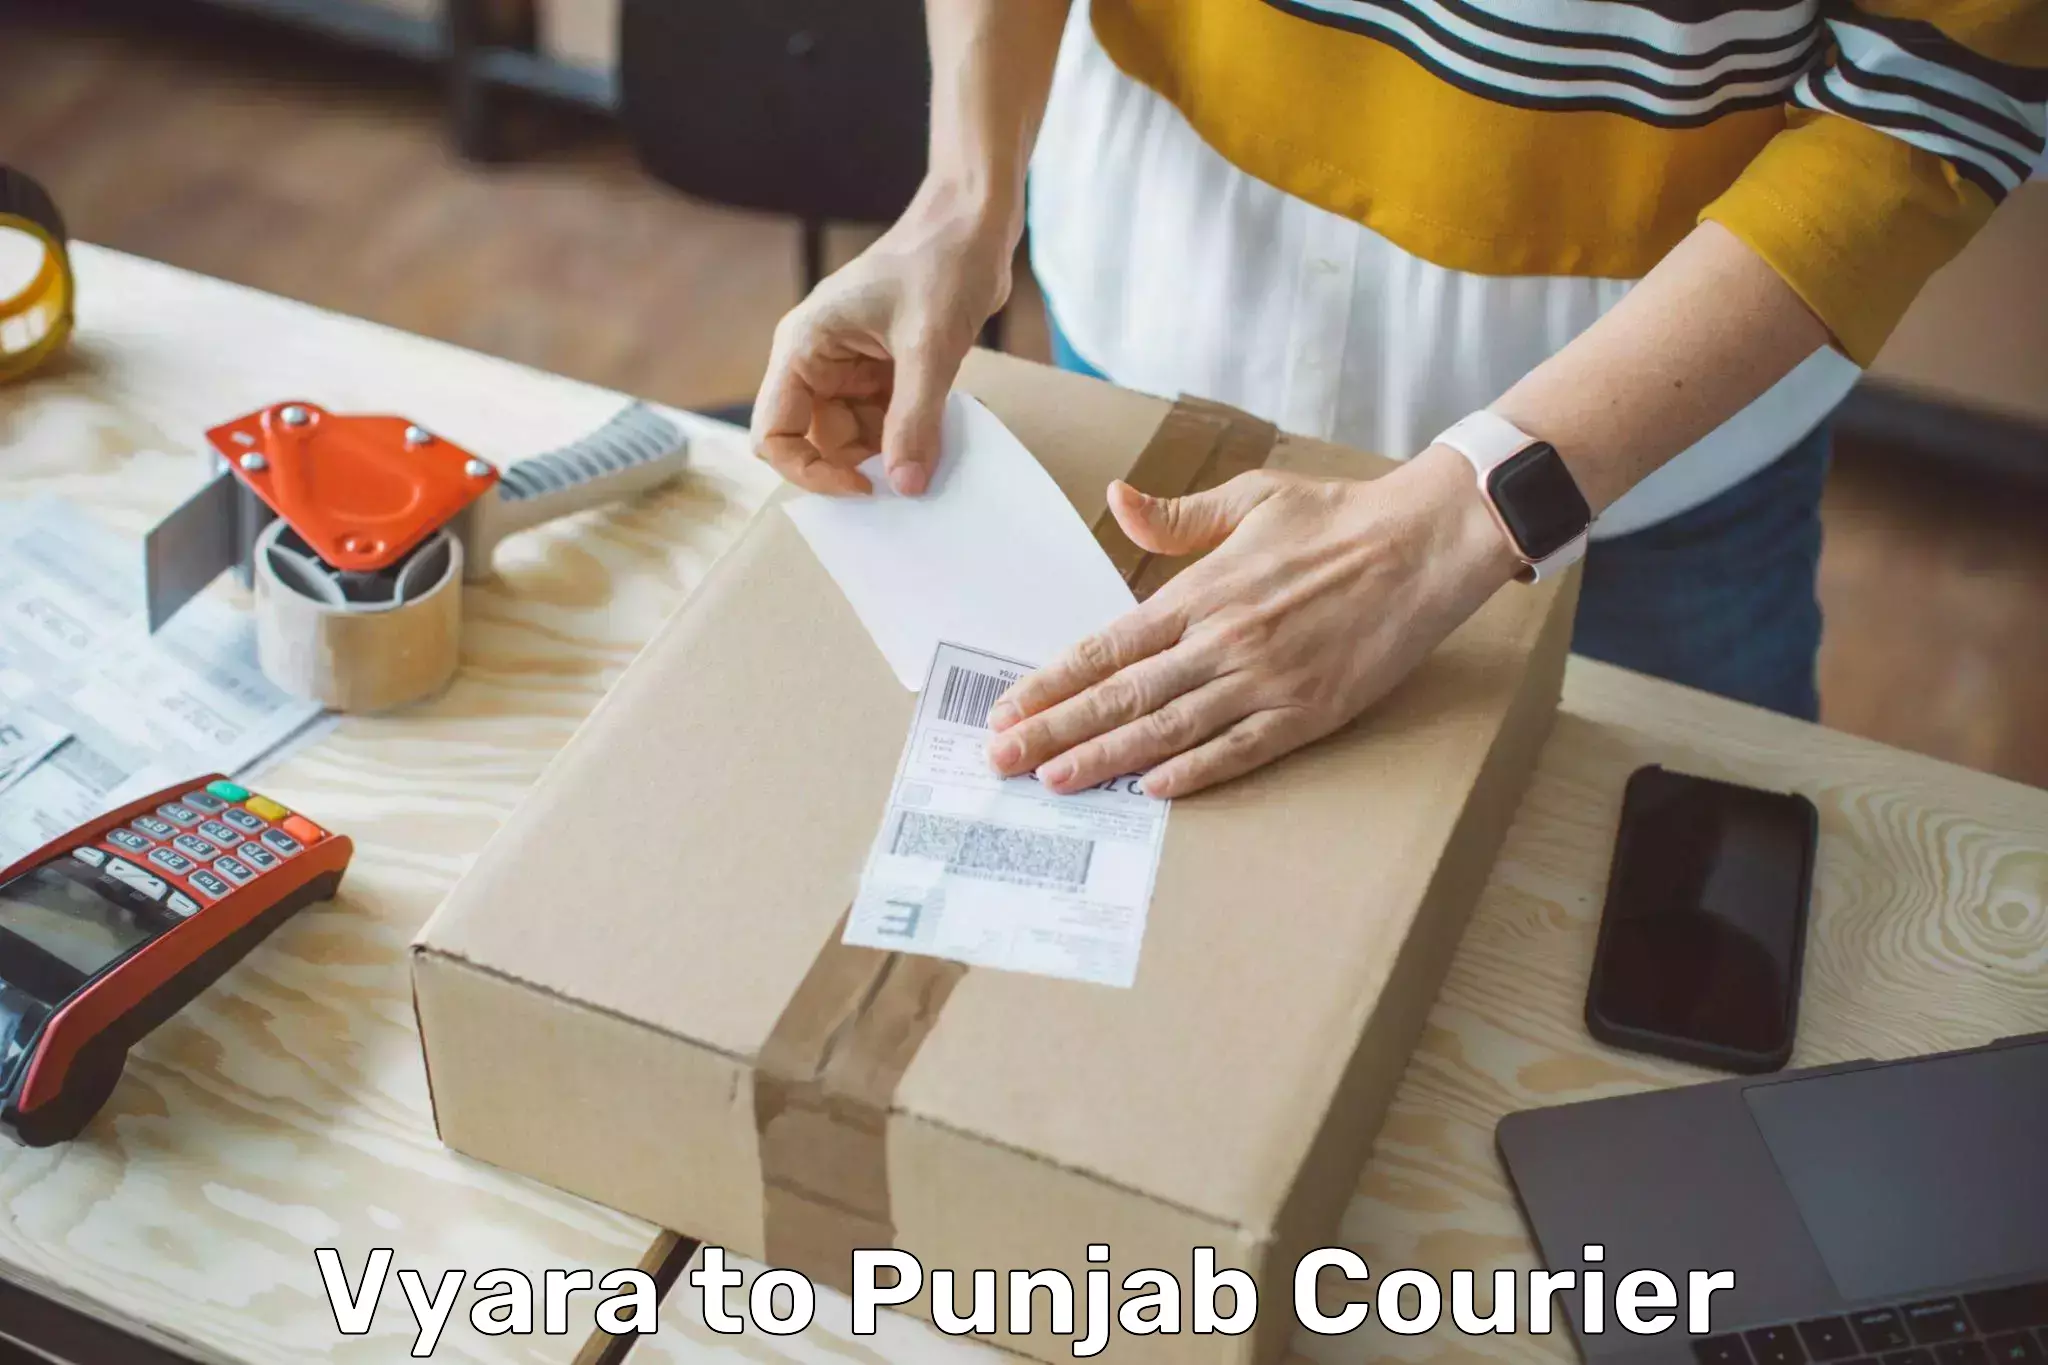 Fast delivery service Vyara to Punjab